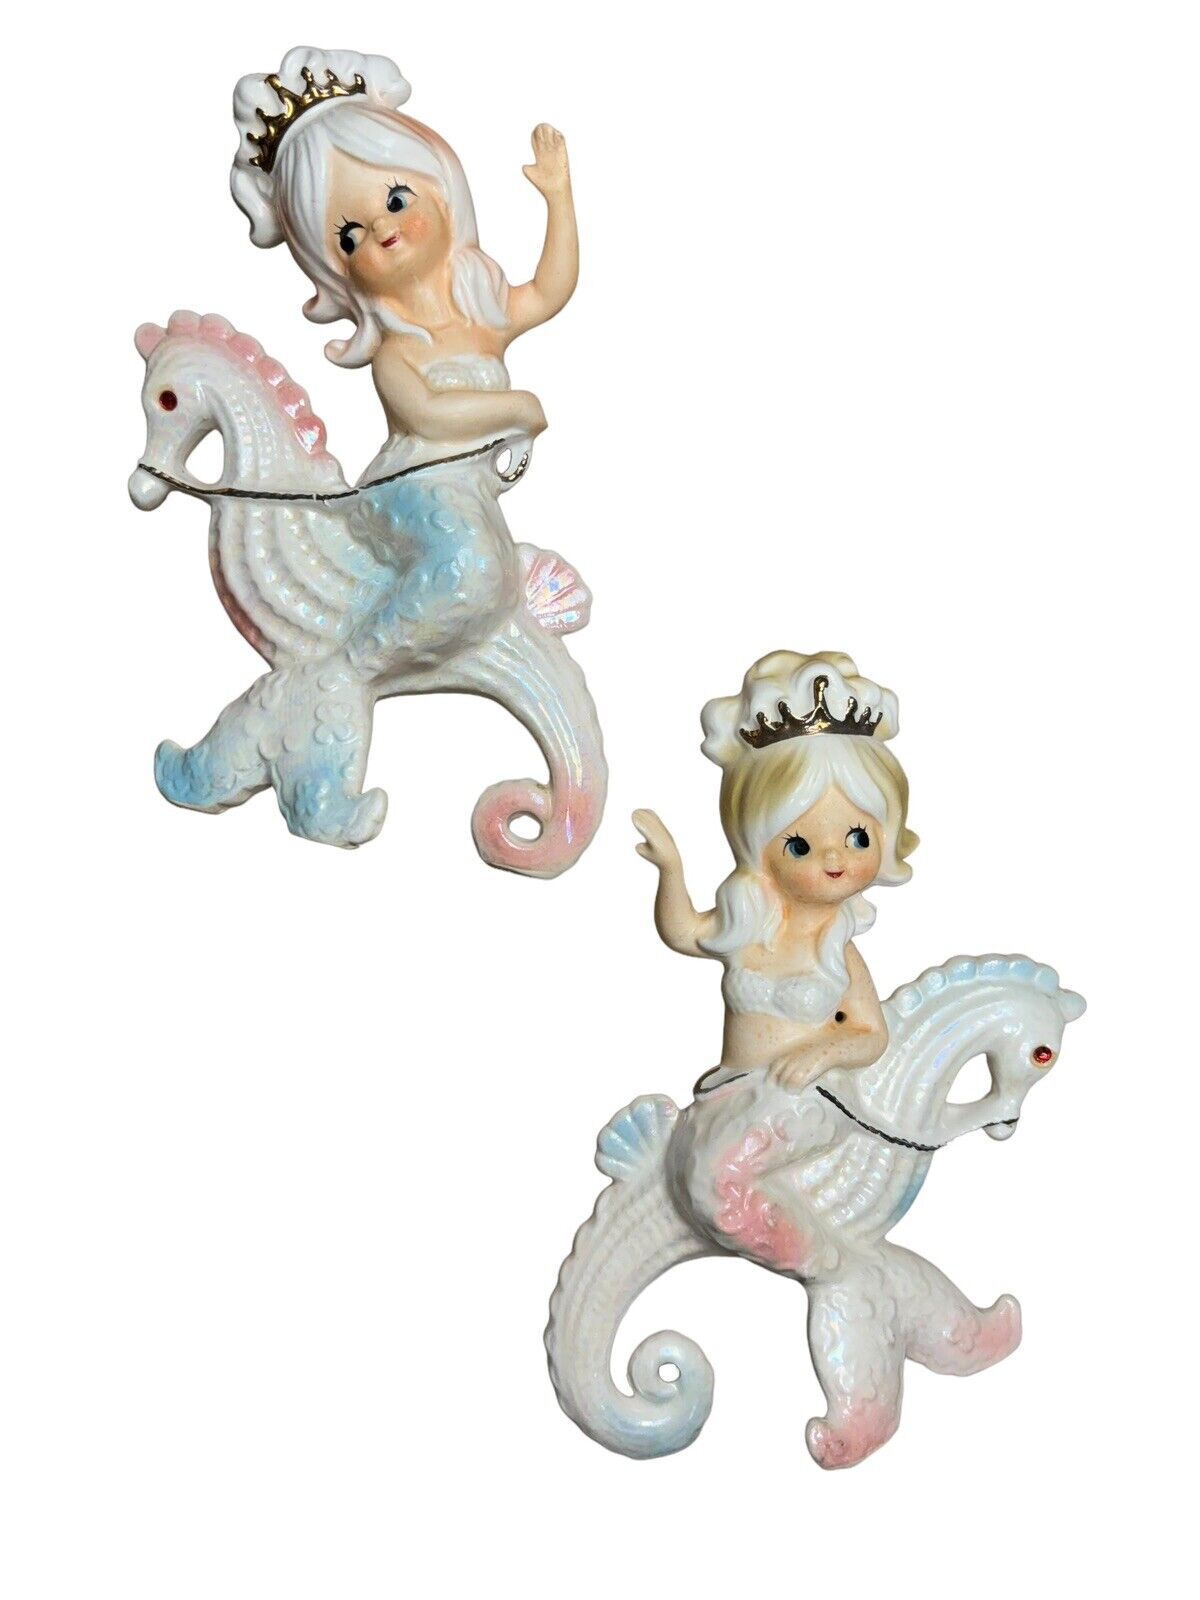 Vtg Lefton Mermaids On Seahorse Wall Decor Figurine #7080 Japan Anthropomorphic